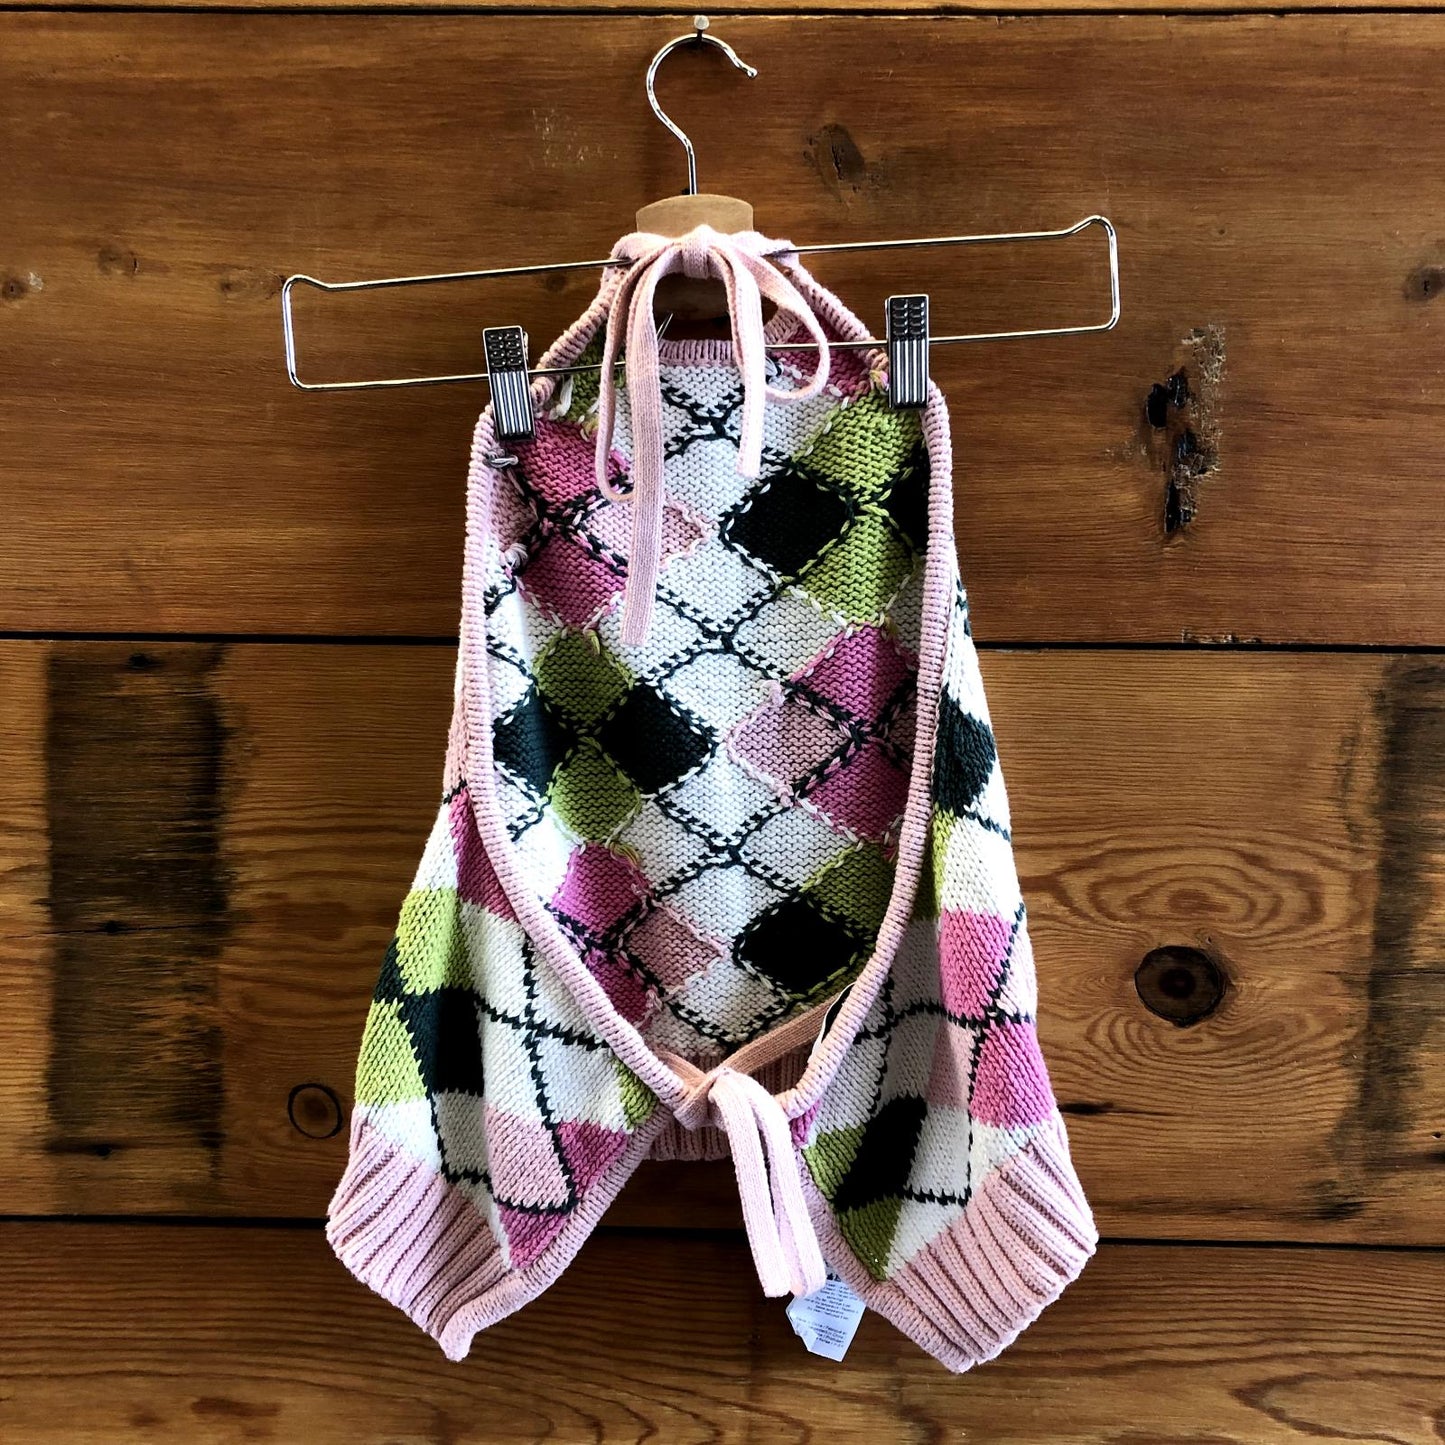 M - Ganni $144 Cotton Knit Pink Argyle Print Cropped Halter Tie Neck Top 1011SC